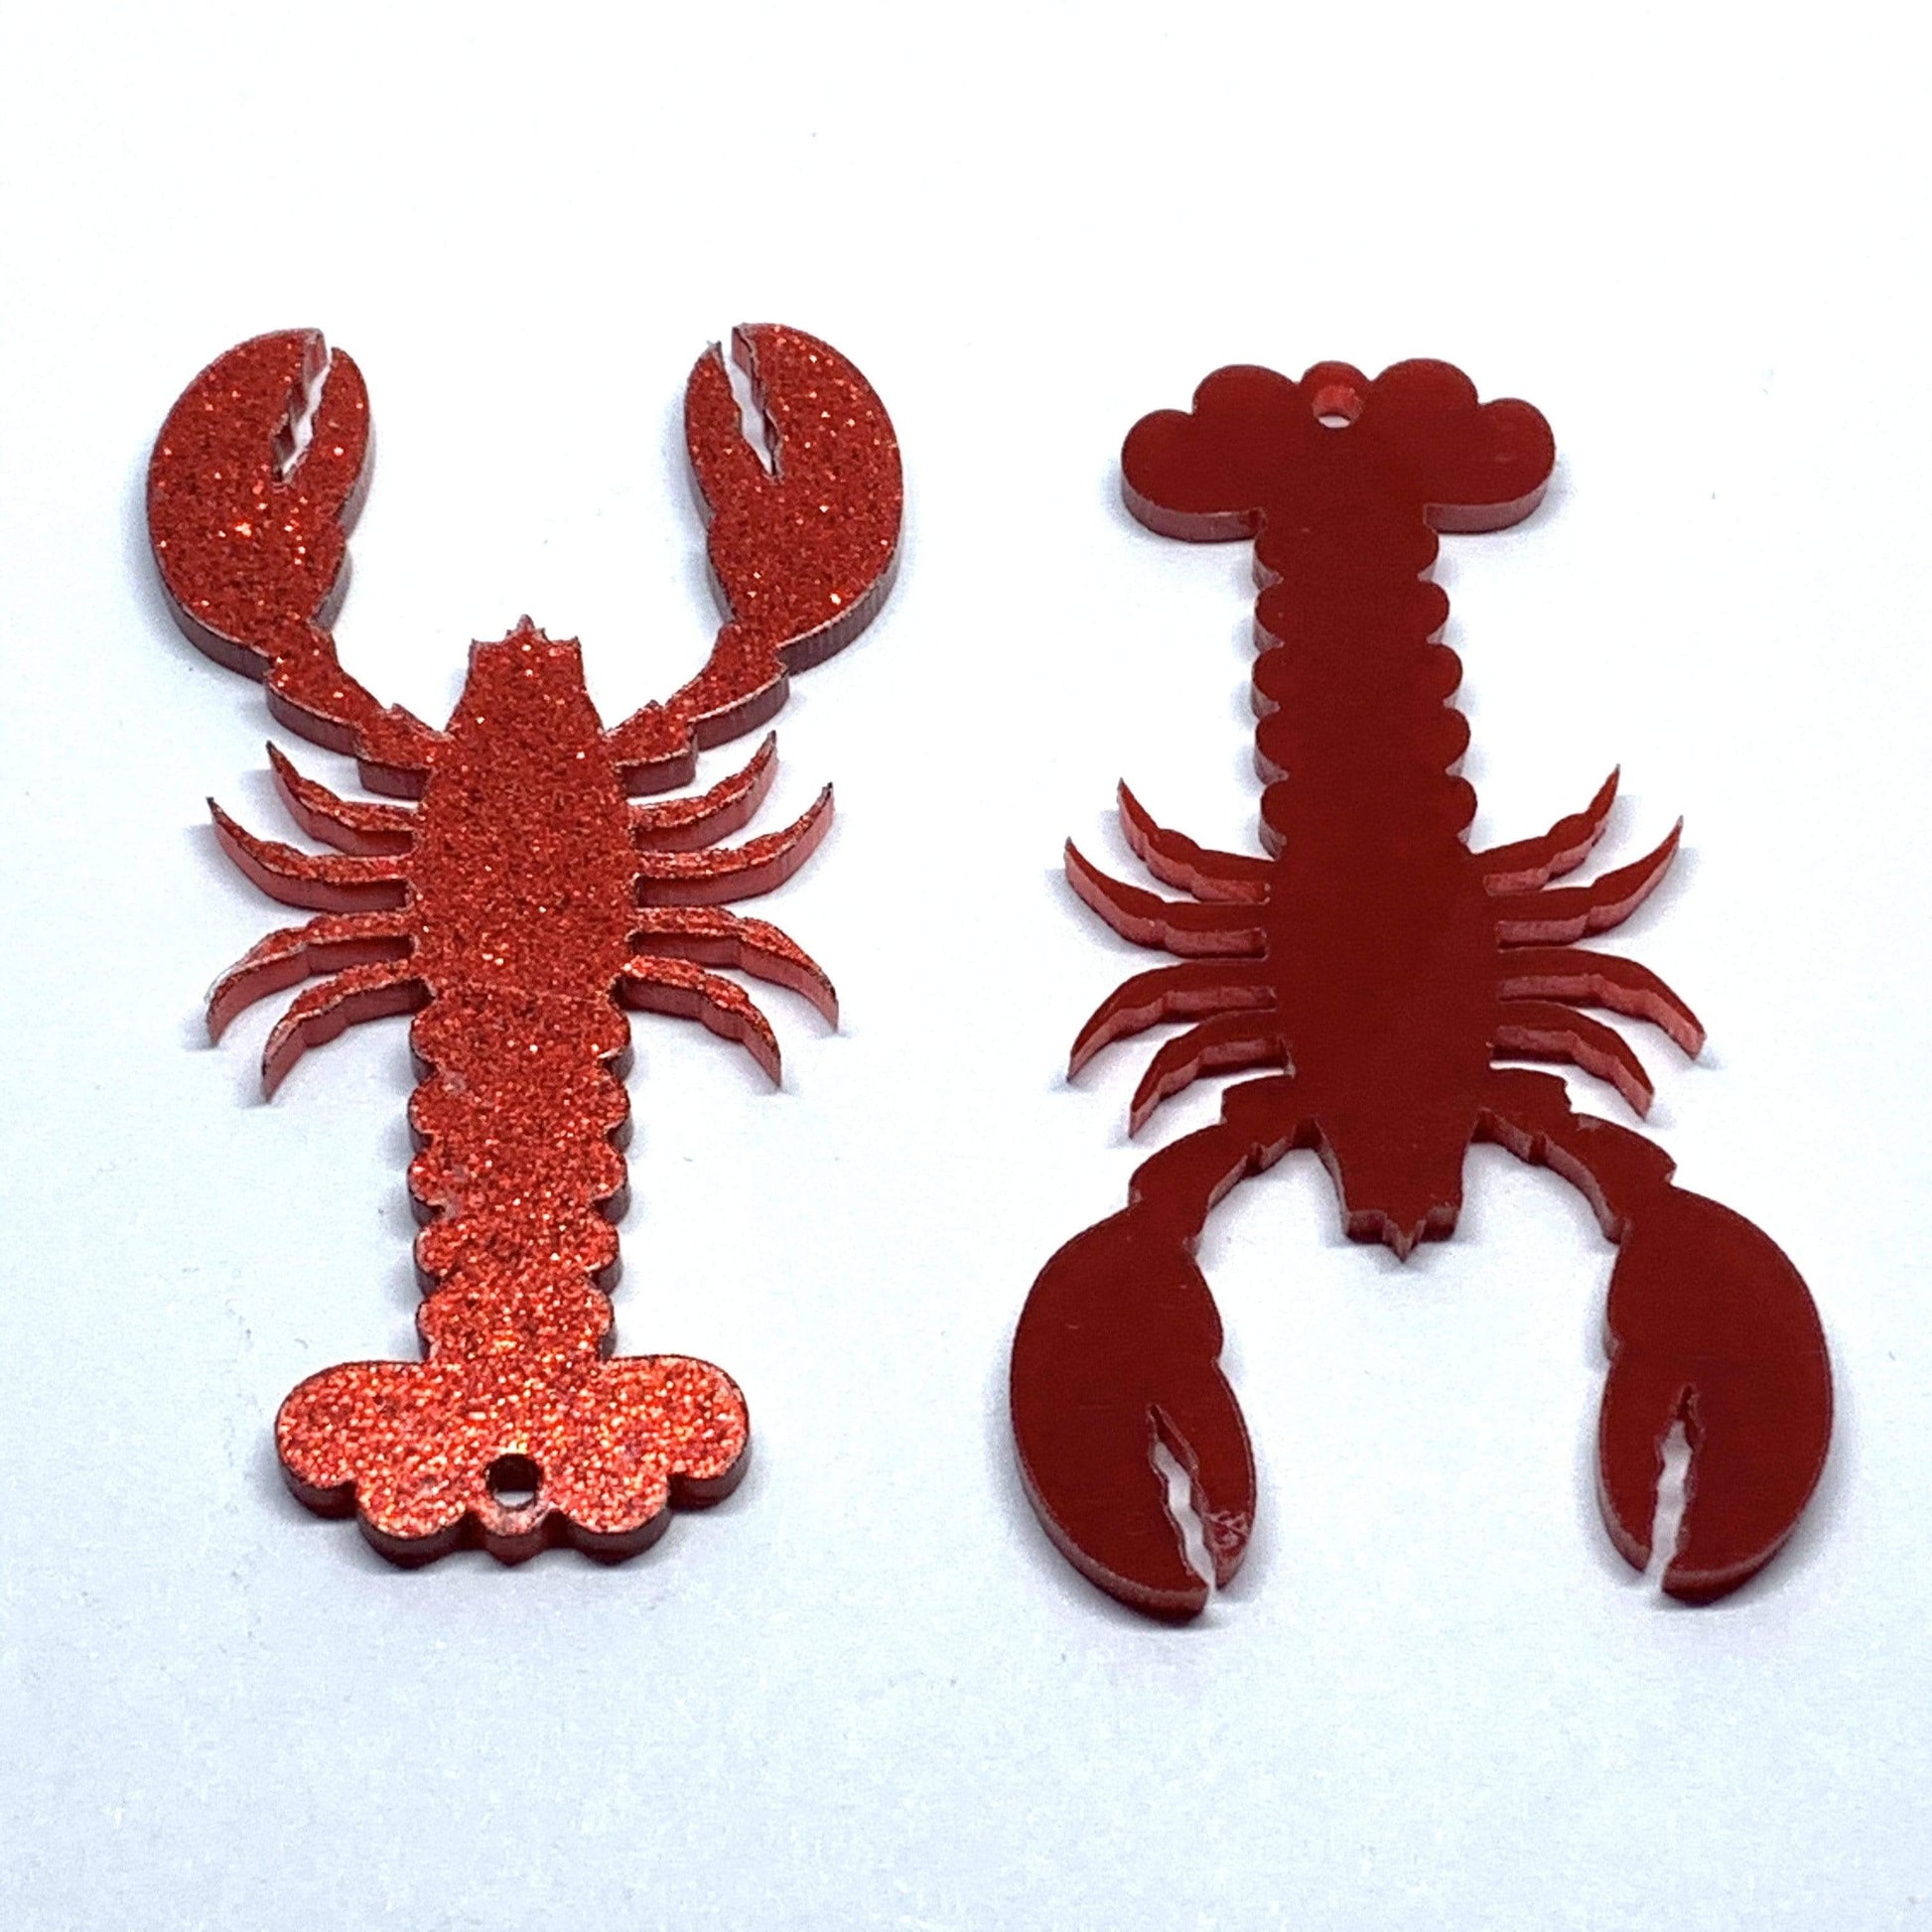 Sundaylace Creations & Bling Resin Gems 60mm Lobster Shaped Acrylic Gem, Reversible Red Glitter/Dark Red, Keychain Resin Gem